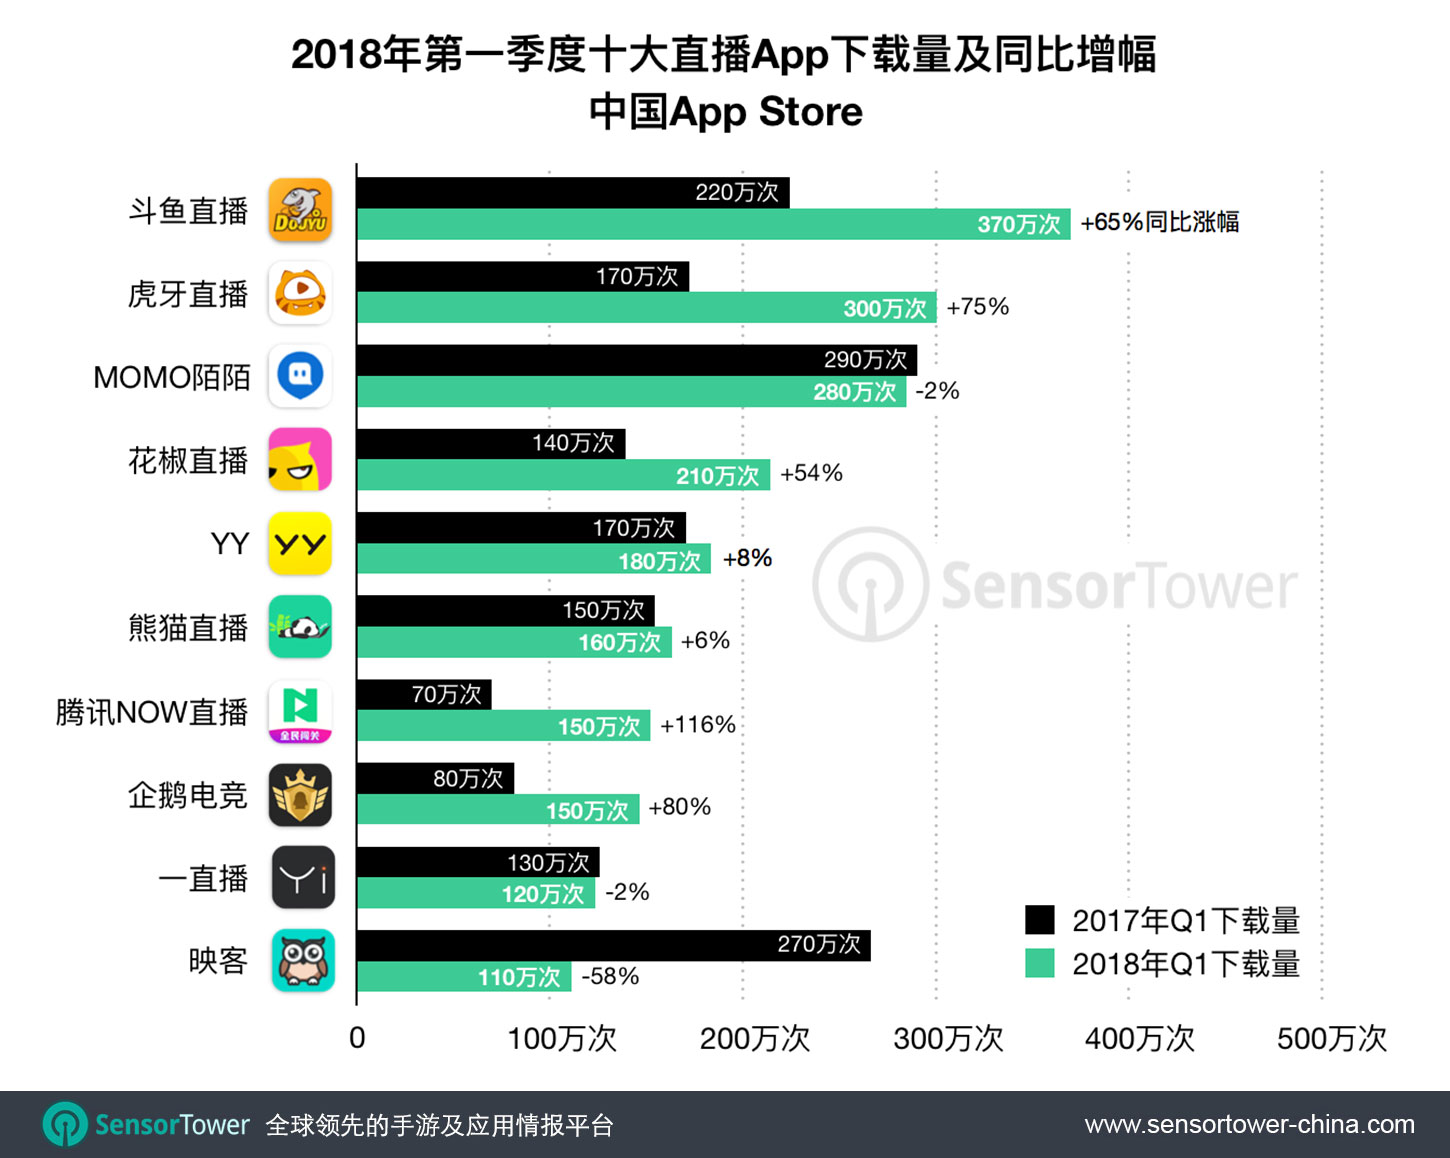 China's Top 10 Live Streaming Apps 1Q17 vs. 1Q18